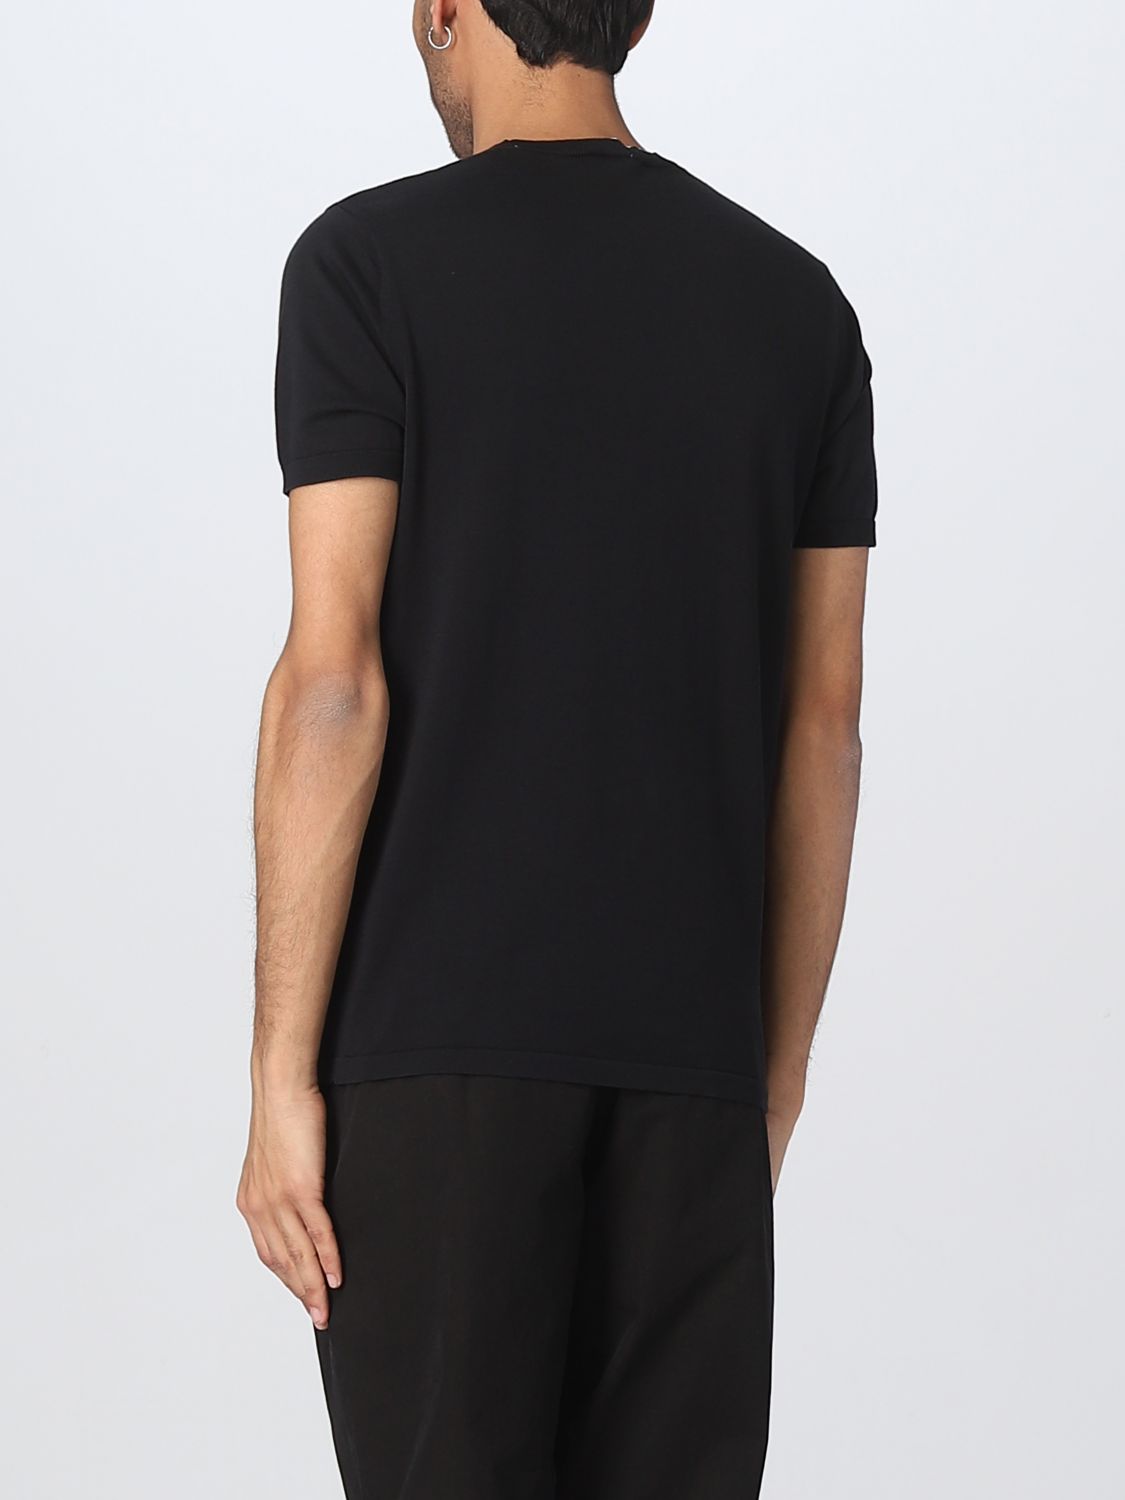 ASPESI: t-shirt for man - Black | Aspesi t-shirt M1493371 online on ...